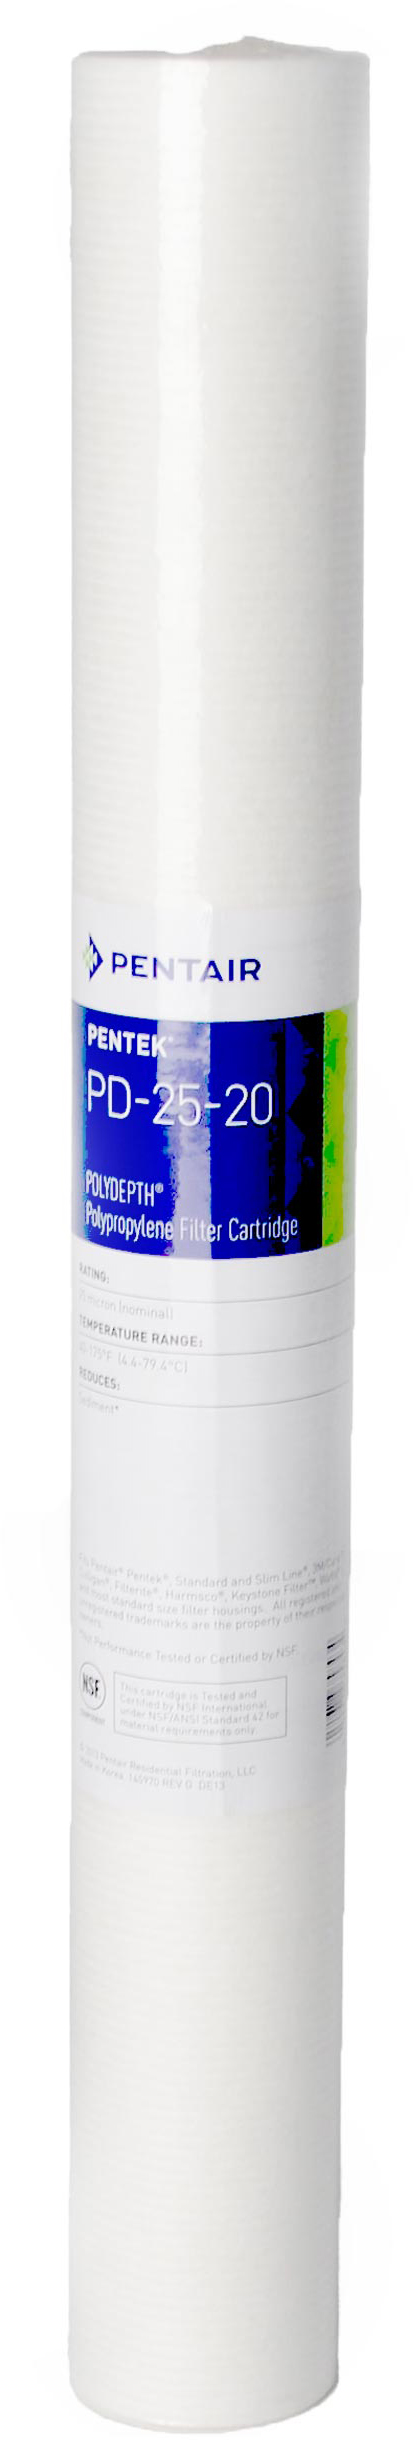 Картридж Pentek для гарячої води Pentek PD-5-20 Polydepth (155756-43)